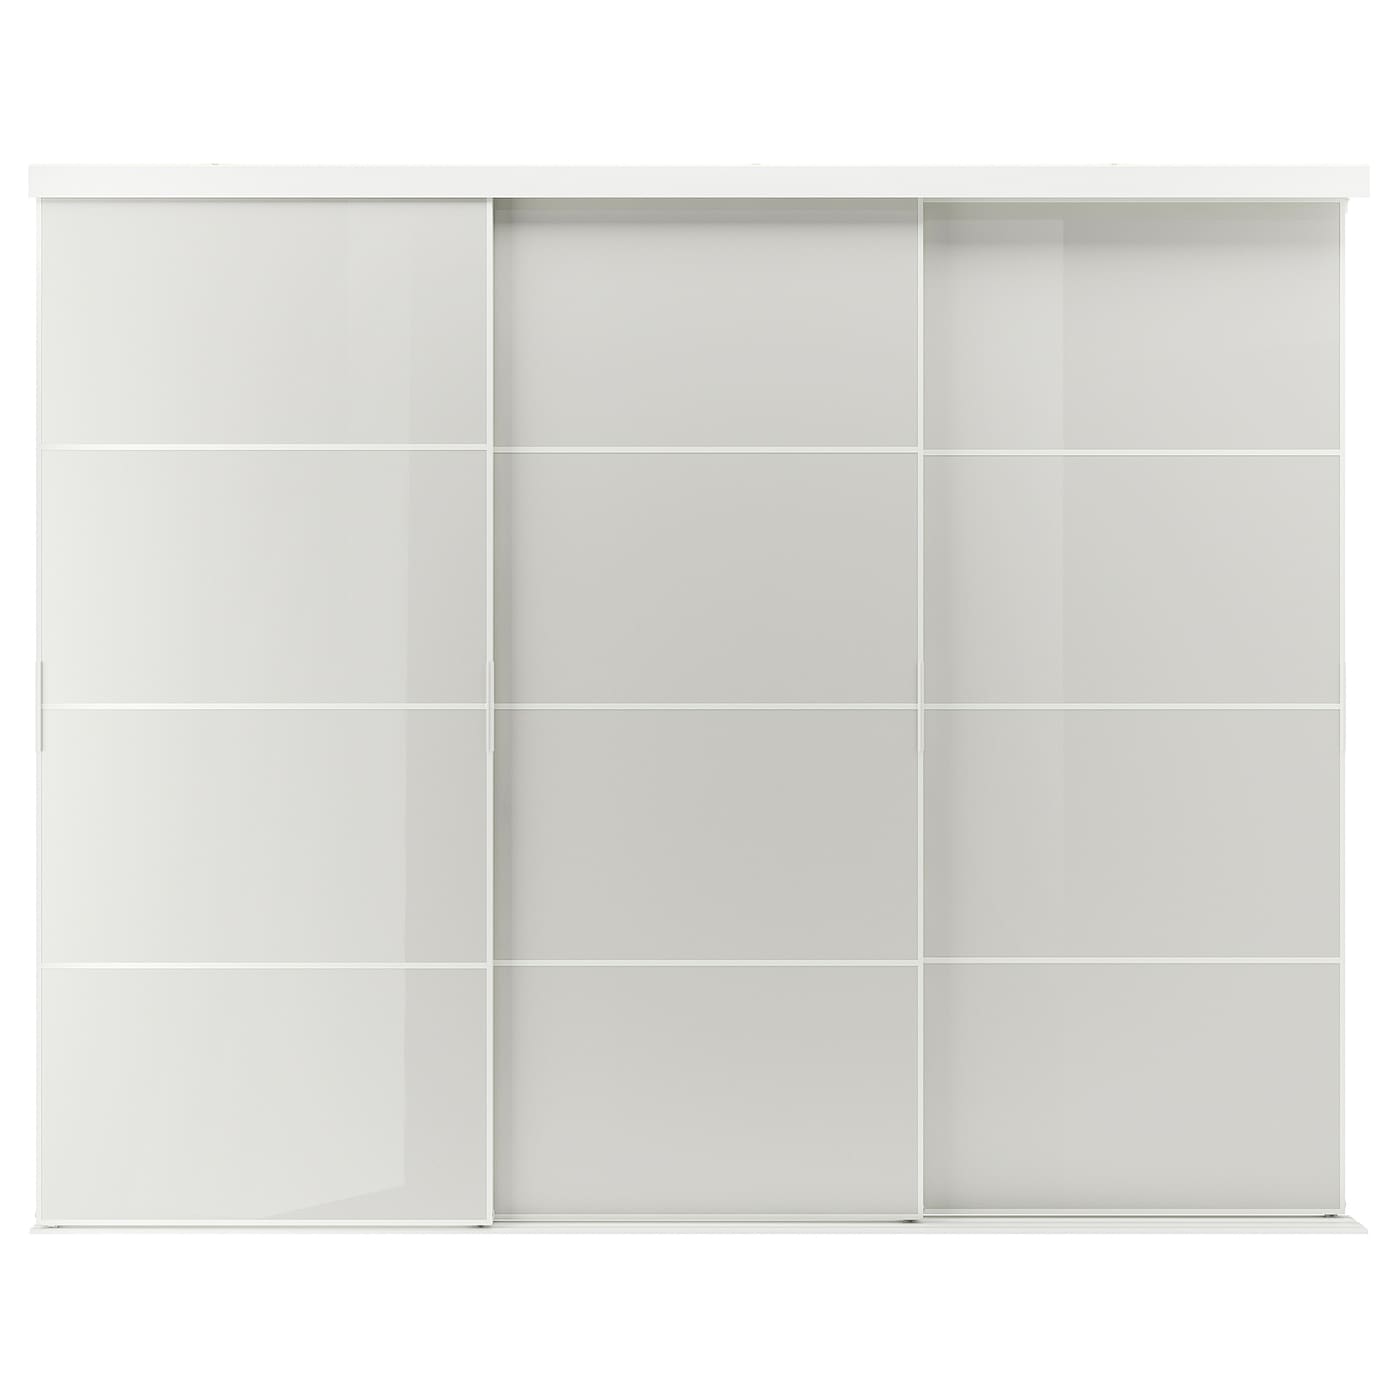 Пара рам раздвижных дверей - SKYTTA/ HOKKSUND IKEA/ СКЮТТА/ ХОККСУНД ИКЕА, 301х240 см, белый